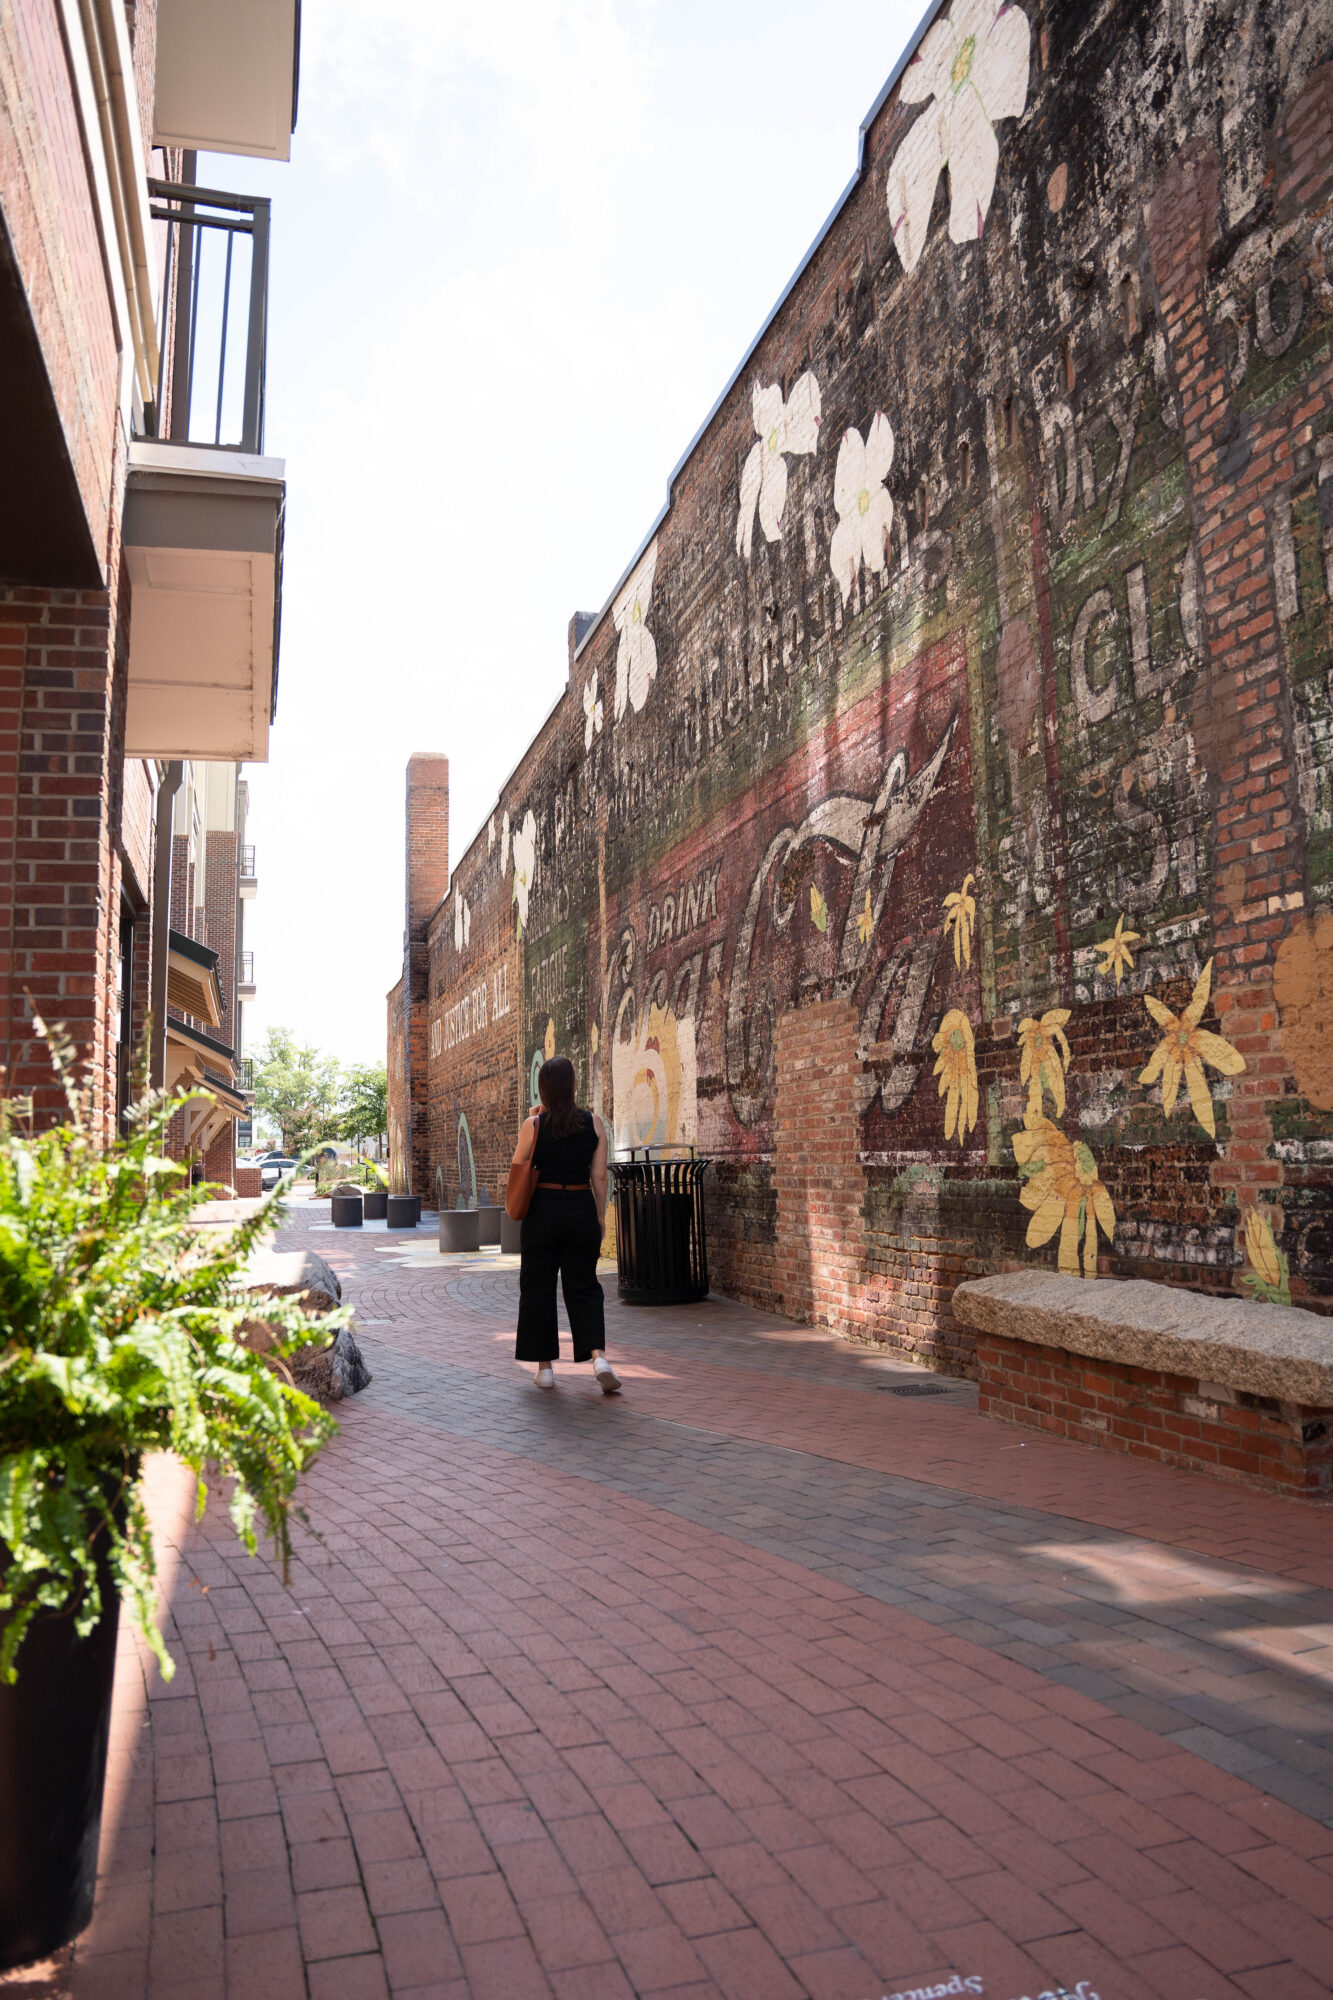 Alyssa walks through an alley with murals in Rock Hill, SC